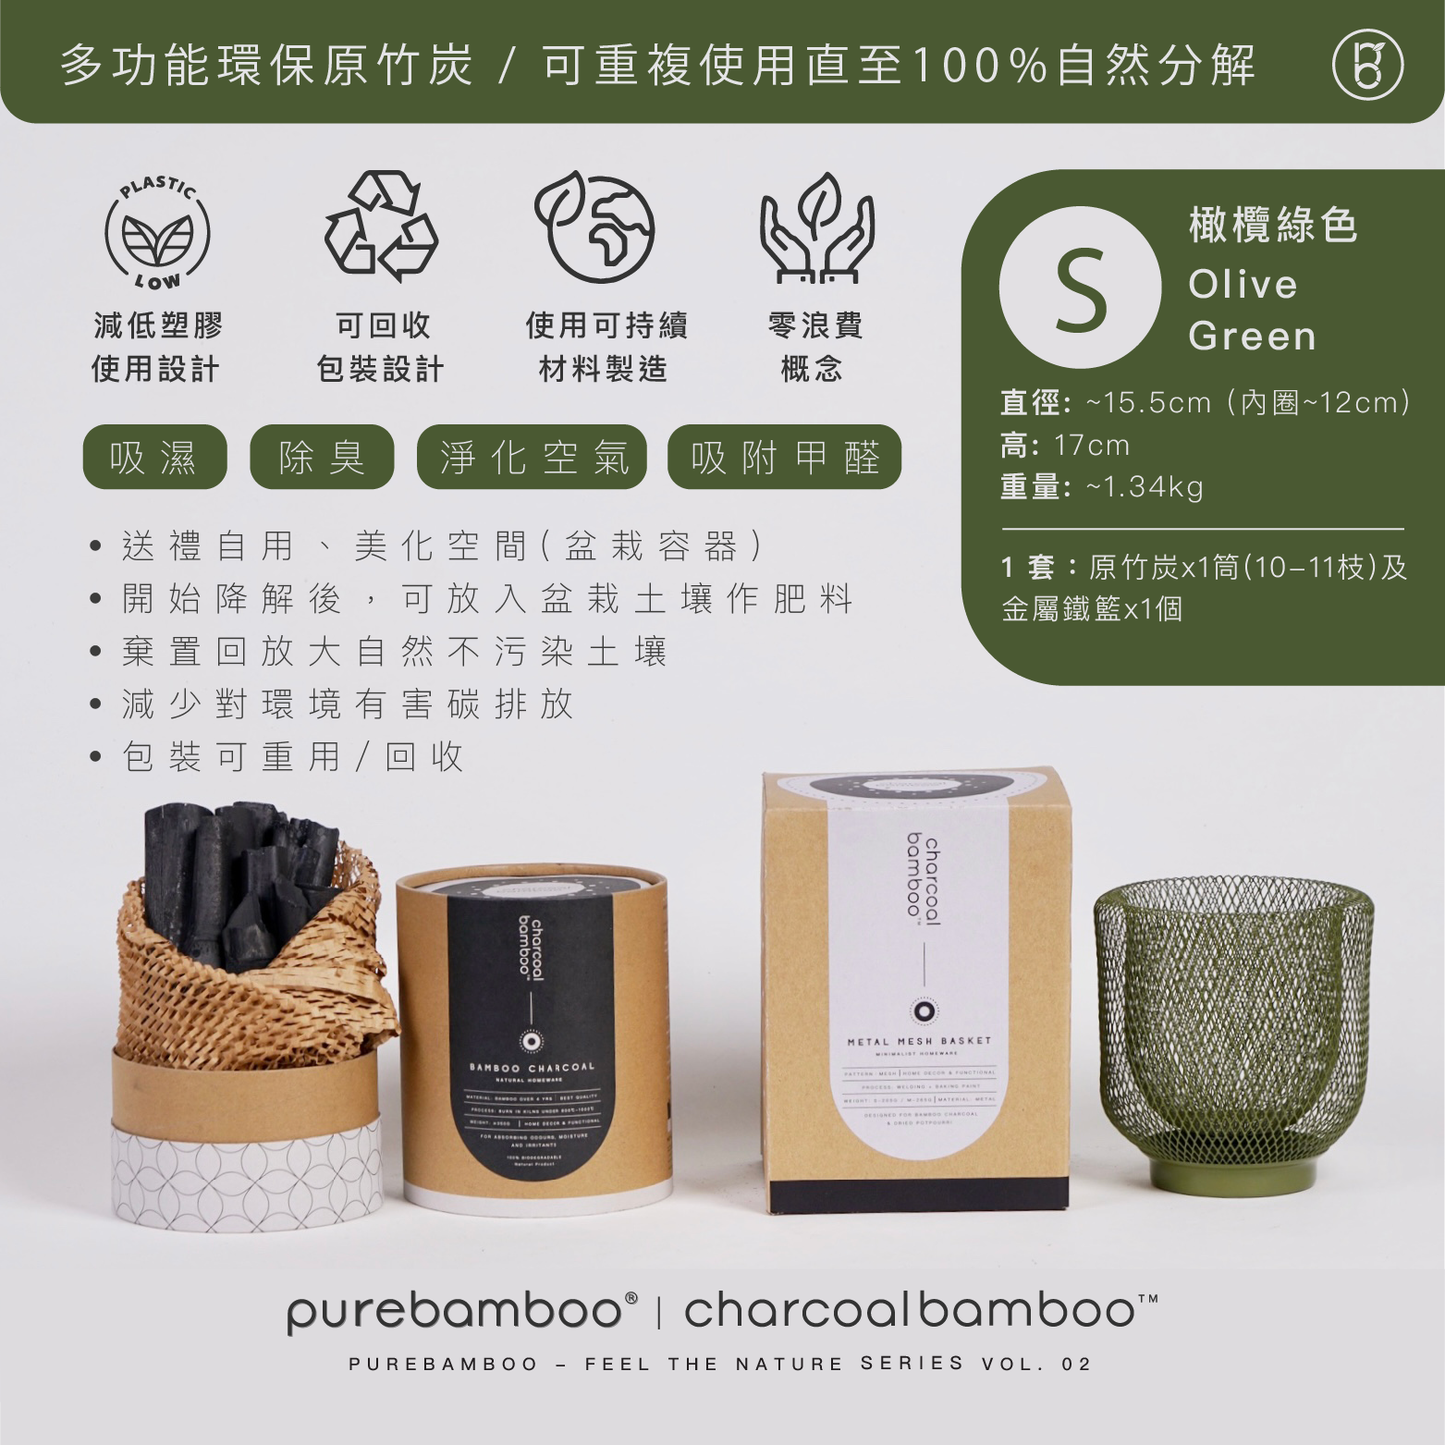 CharcoalBamboo - 多功能天然原竹炭套裝